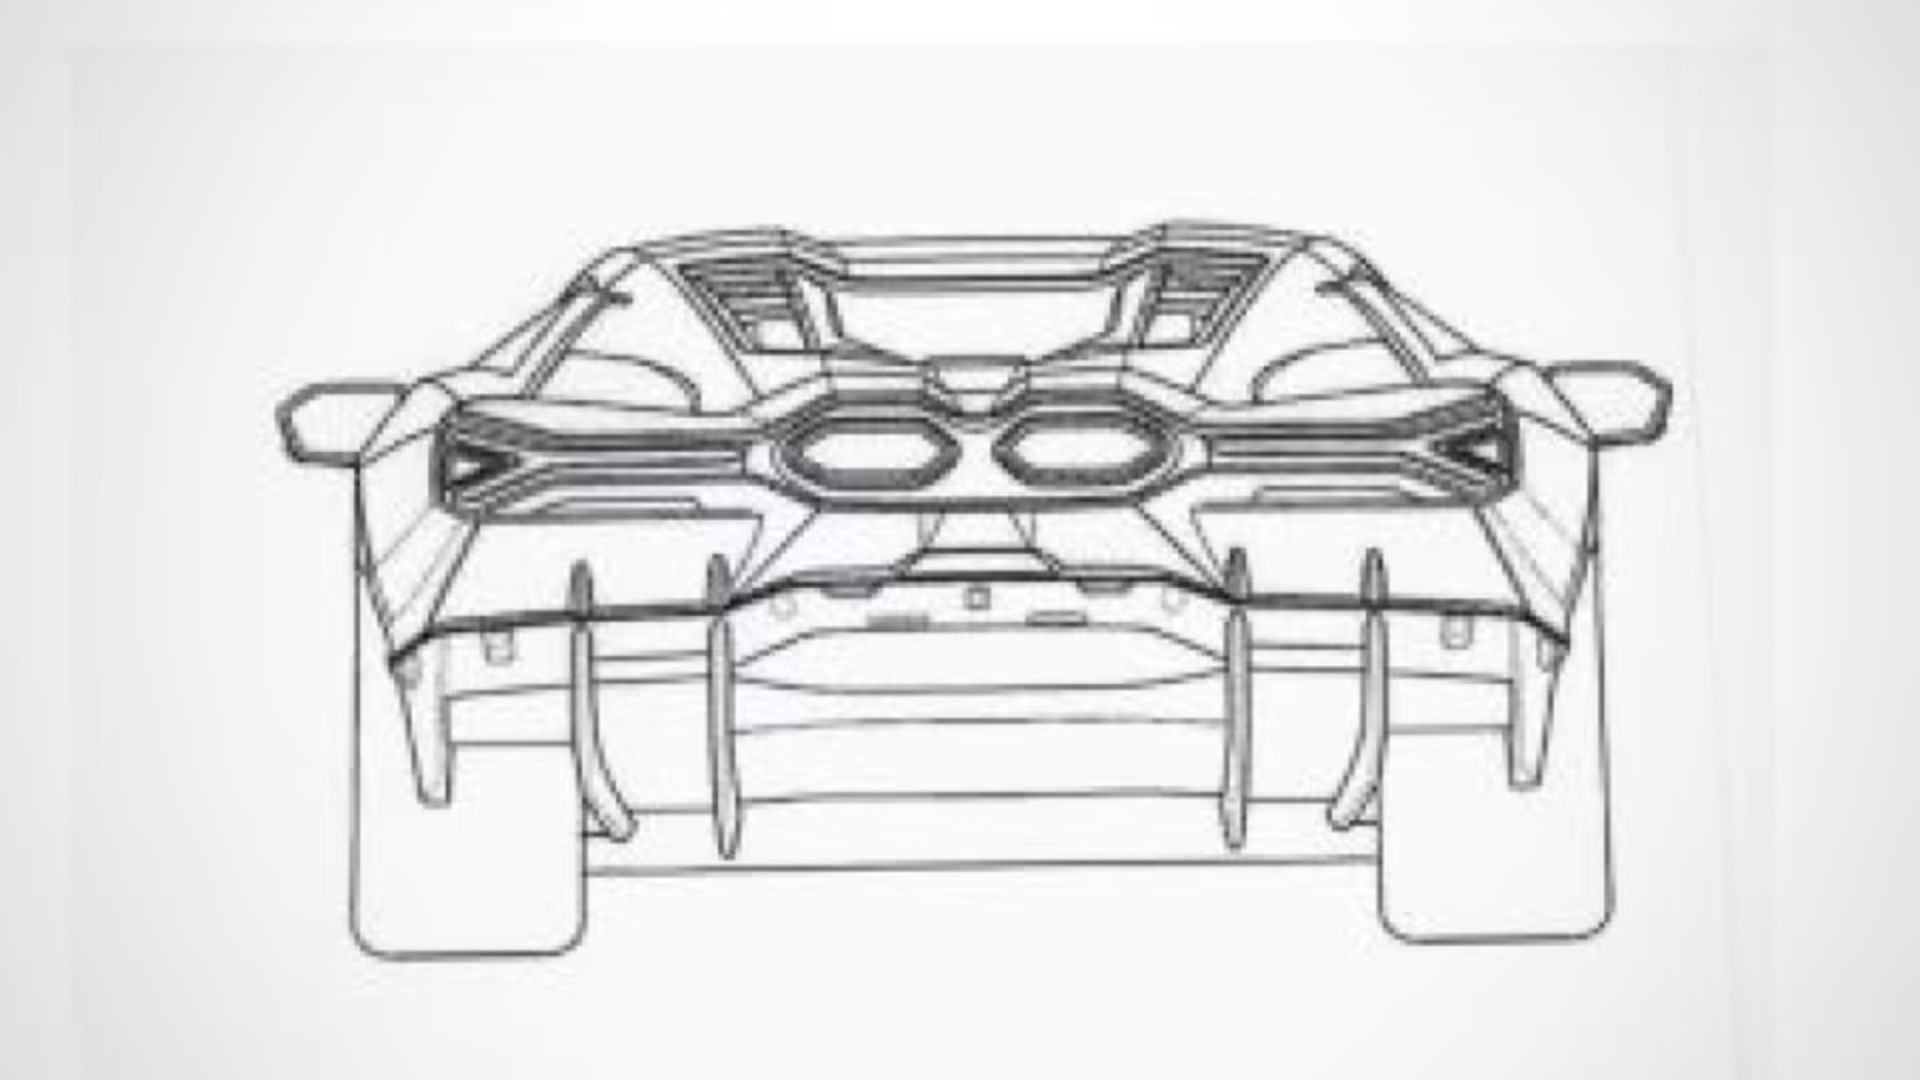 Lamborghini Aventador replacement rear